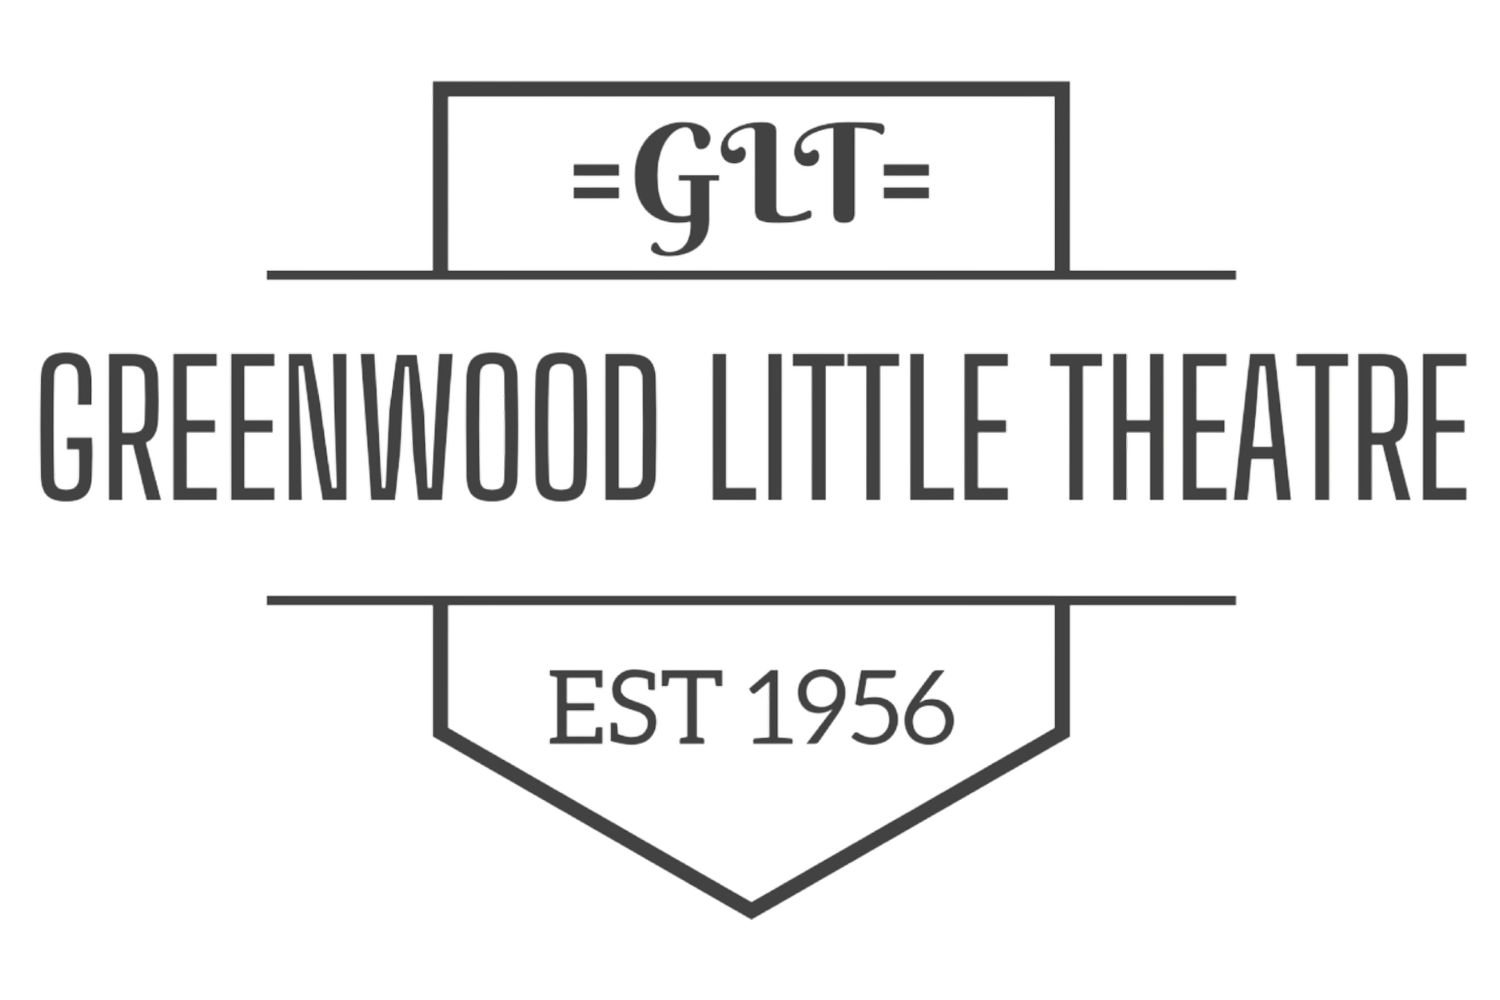 Greenwood Little Theatre